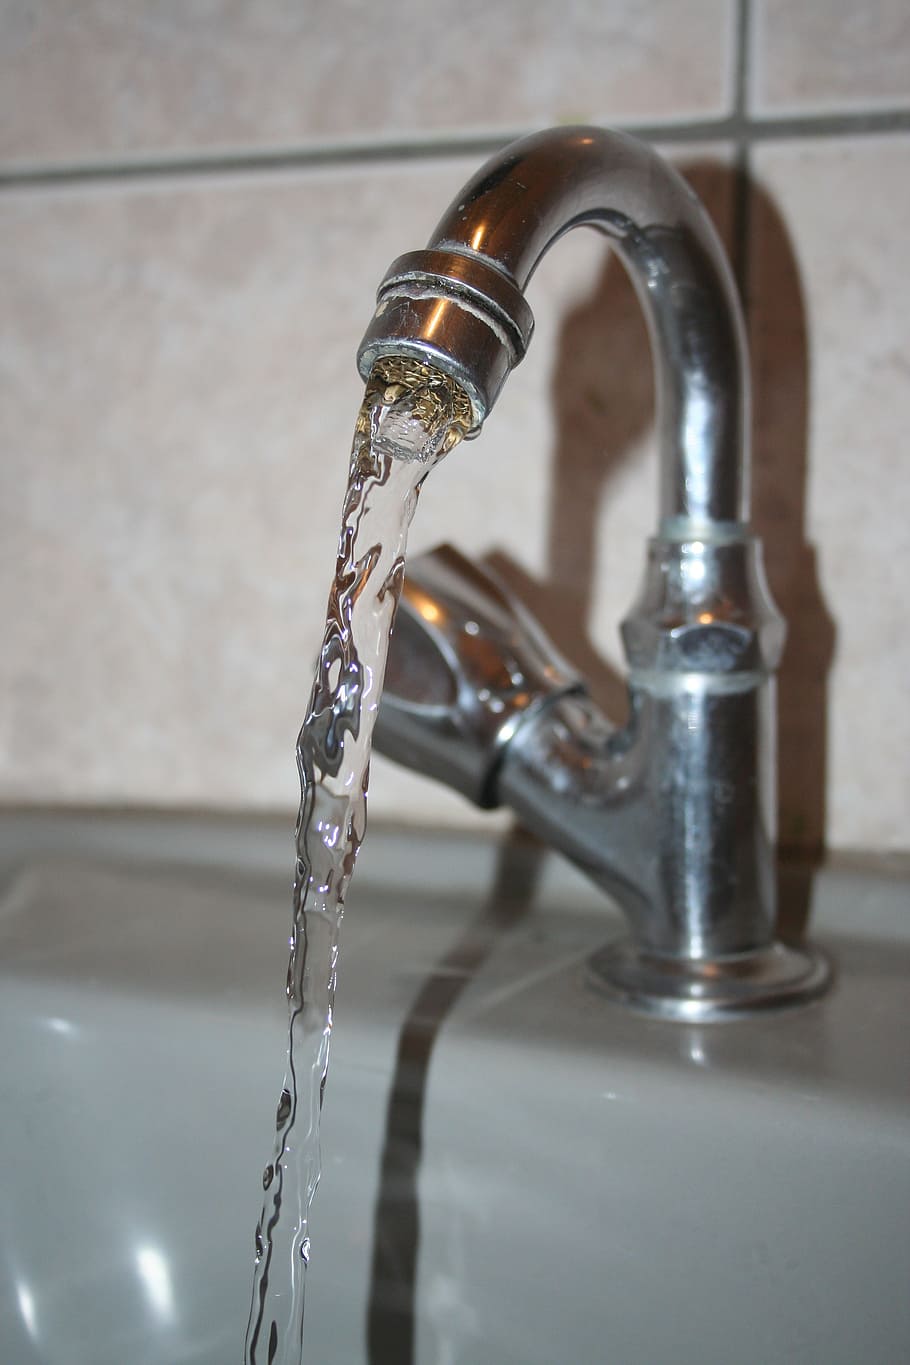 agua, tap, thirst, faucet, bathroom, metal, water, sink, close-up, indoors